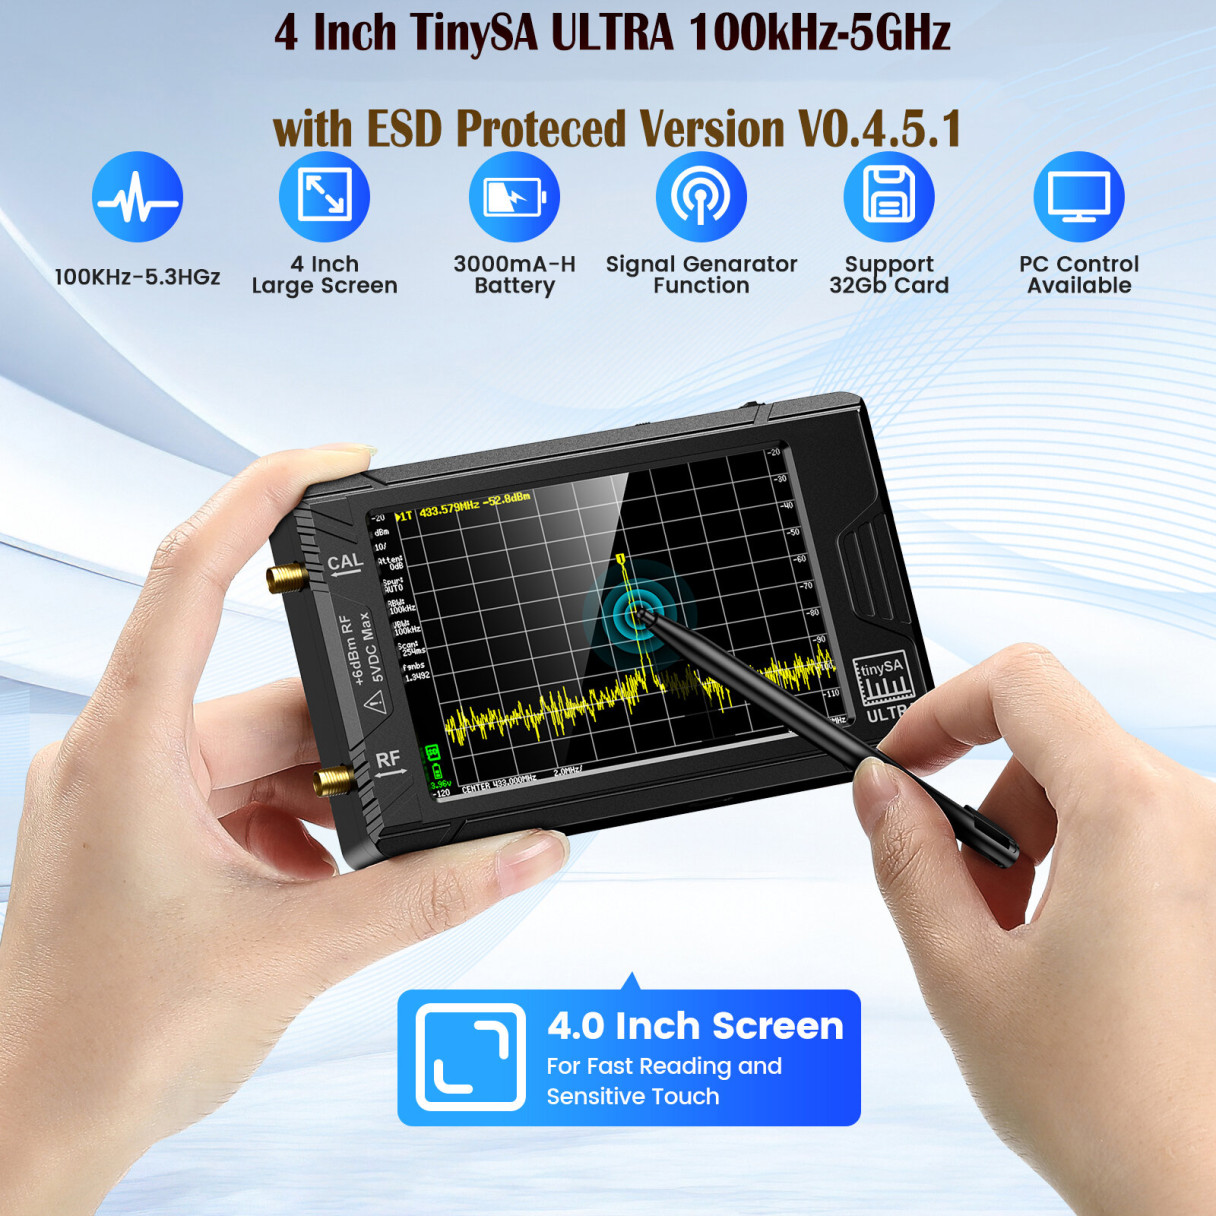 Handheld 4" Display Tiny Spectrum Analyzer TinySA ULTRA 100kHz to 5.3GHz with 32GB Card Version V0.4.5.1